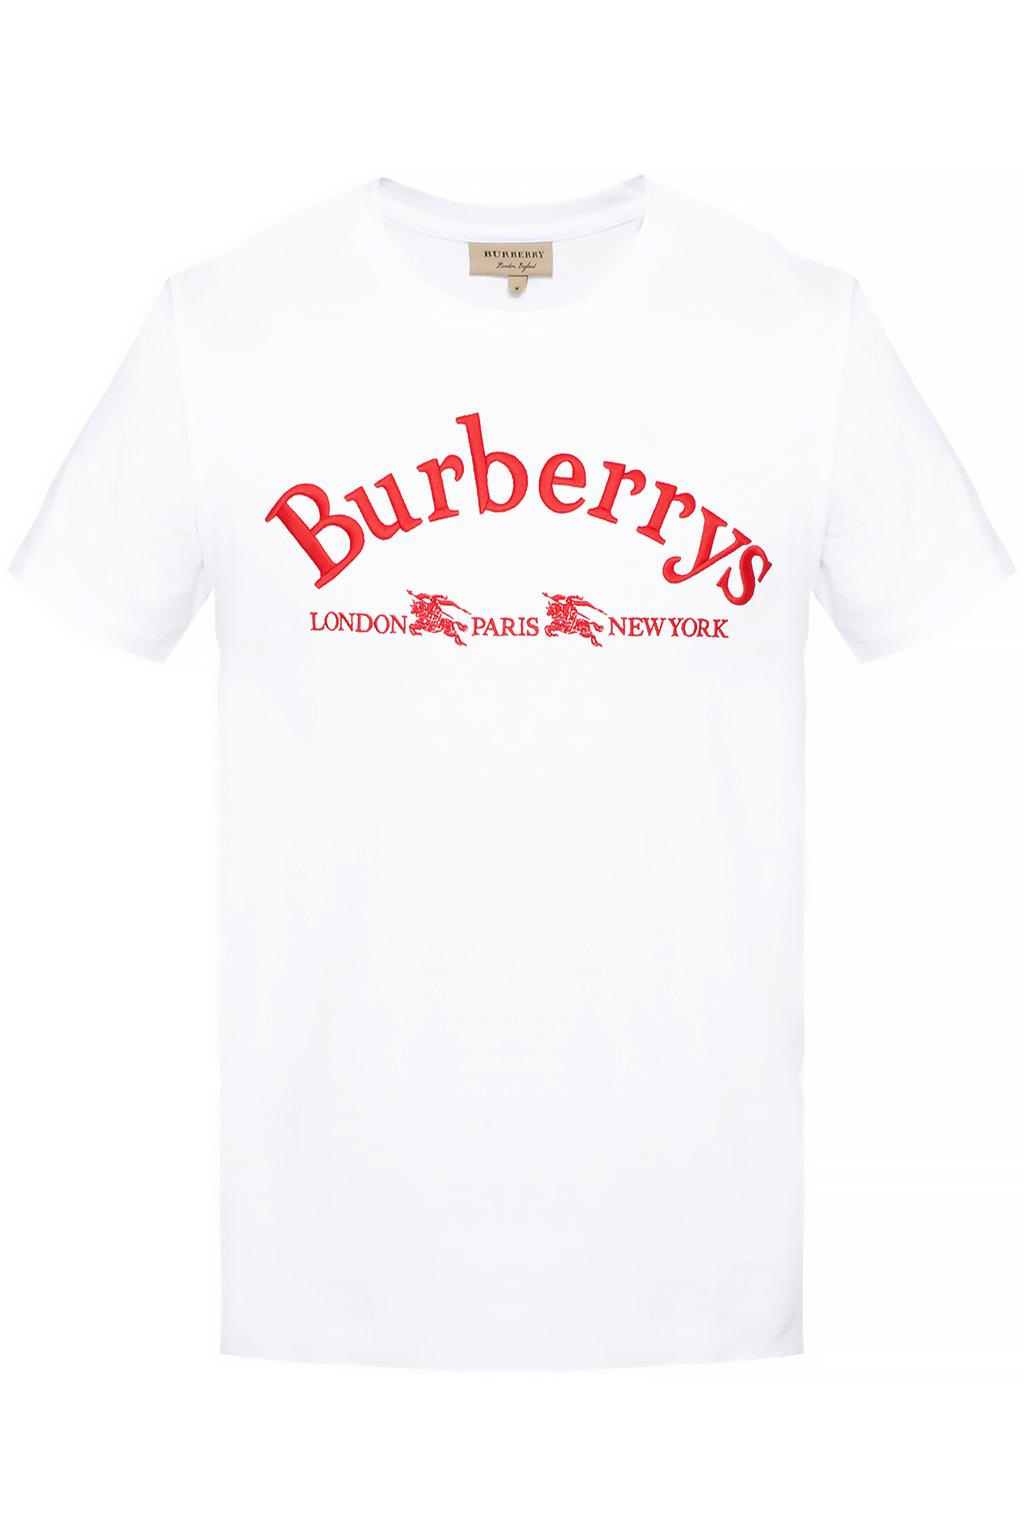 burberry white t shirt red logo